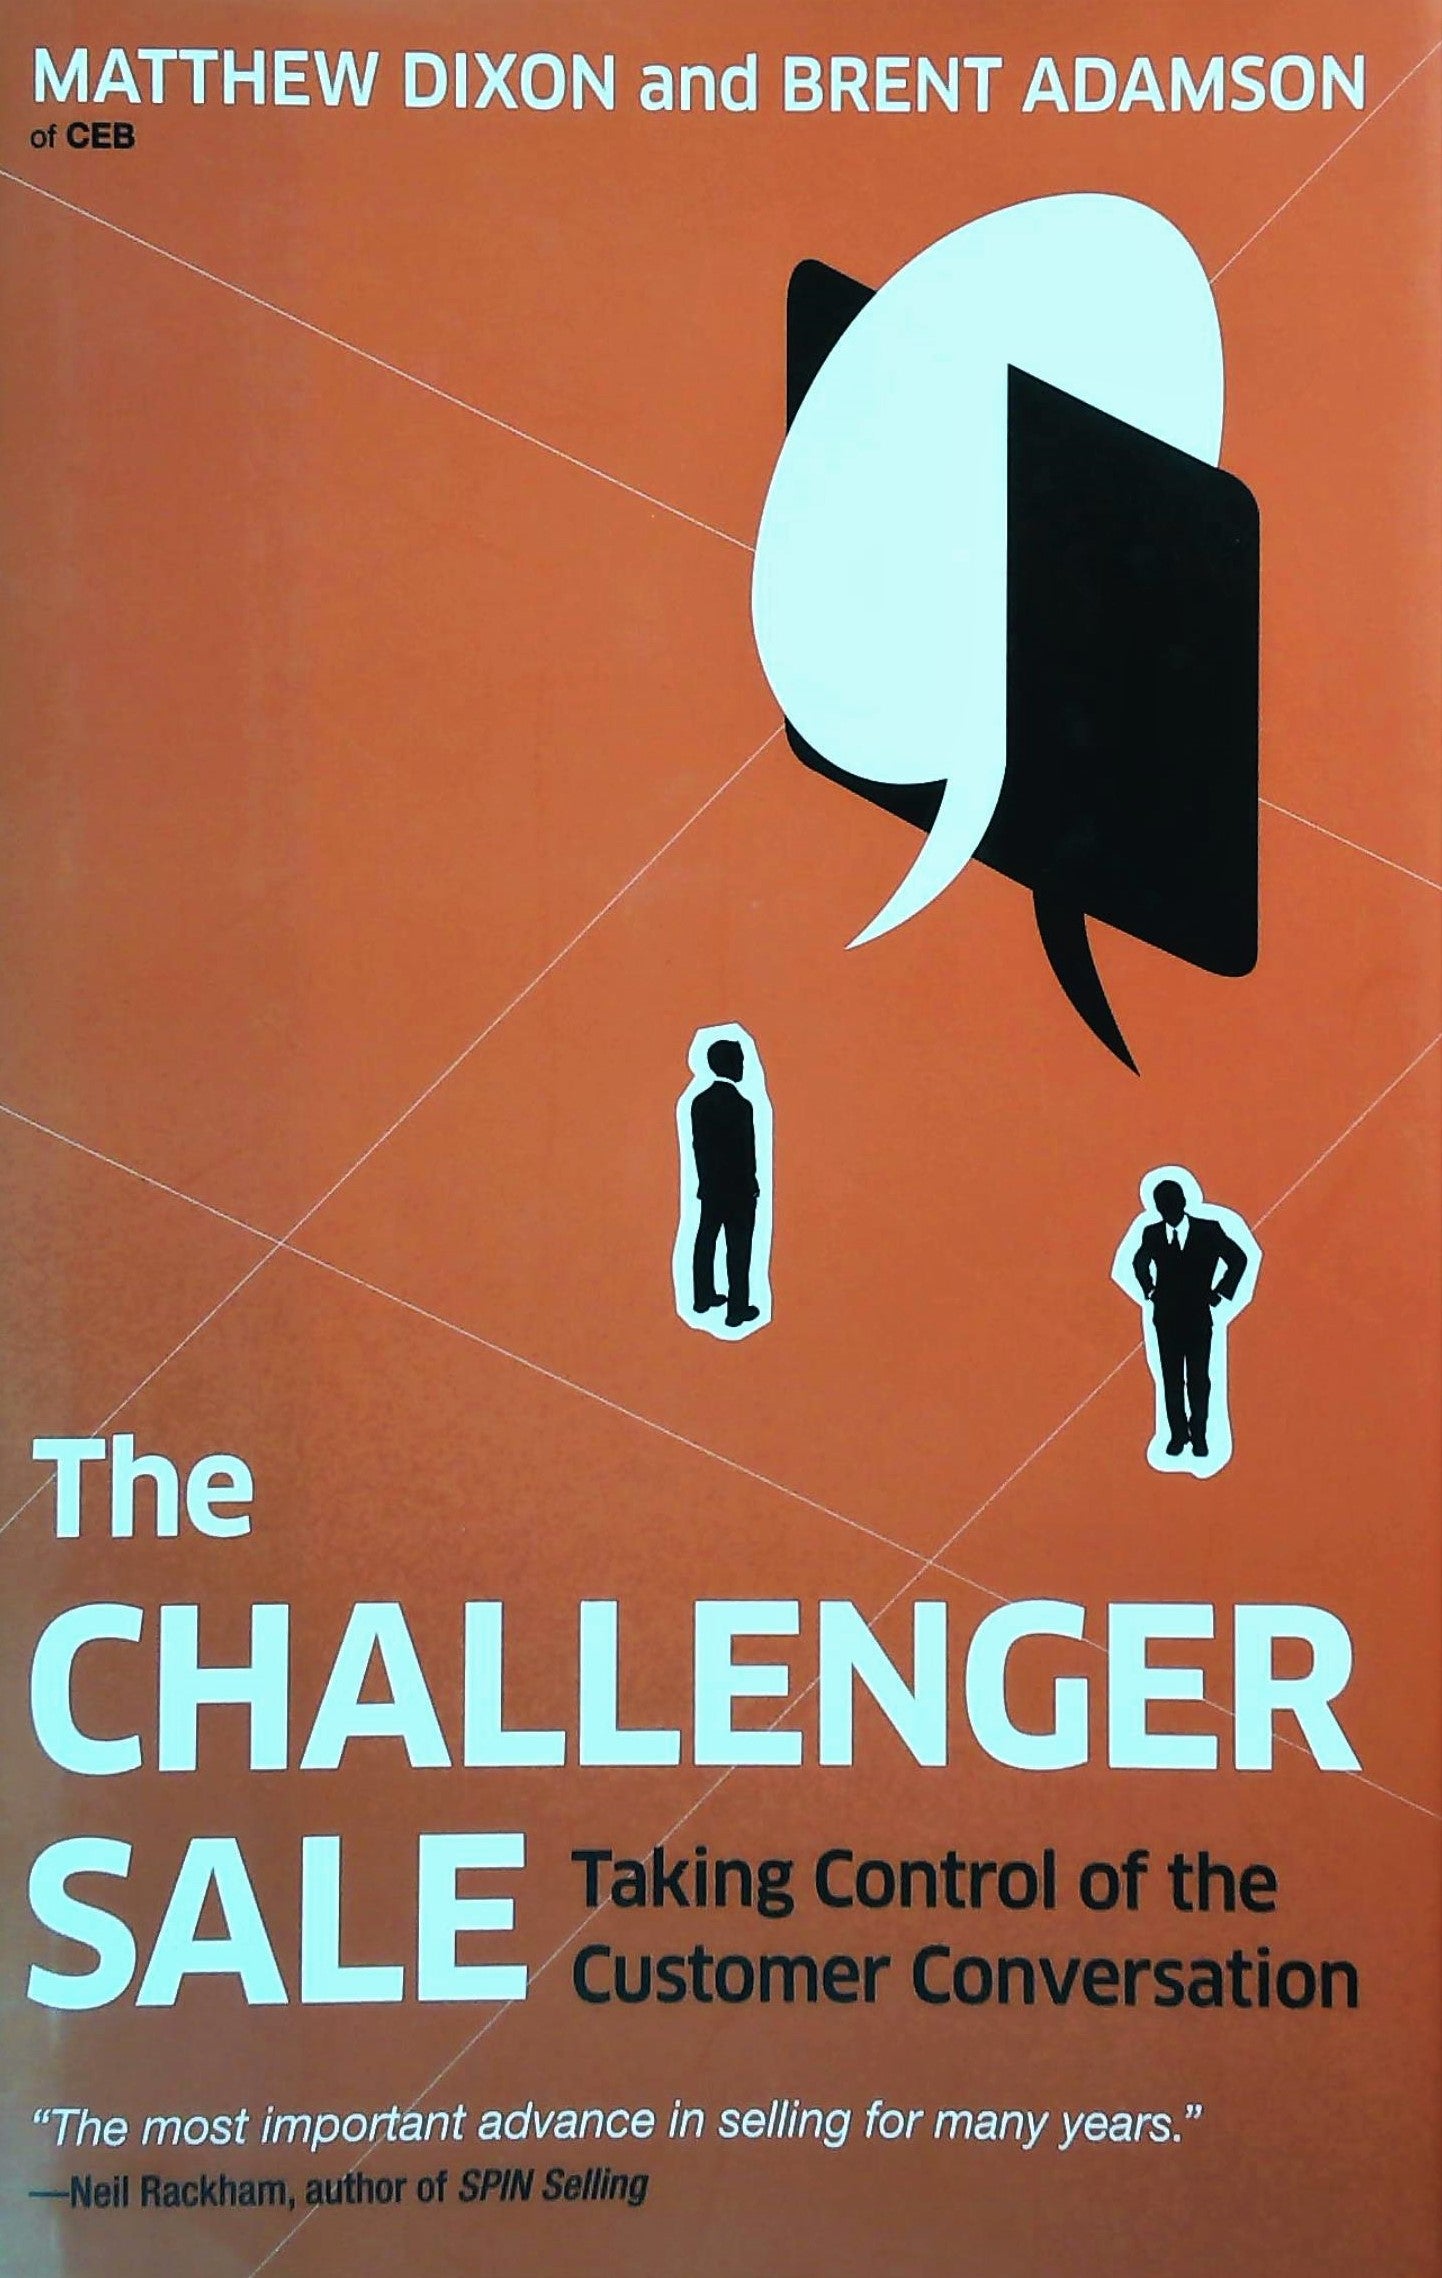 Livre ISBN 1591844355 The Challenger Sale : Taking Control of the Customer Conversatio (Matthew Dixon)